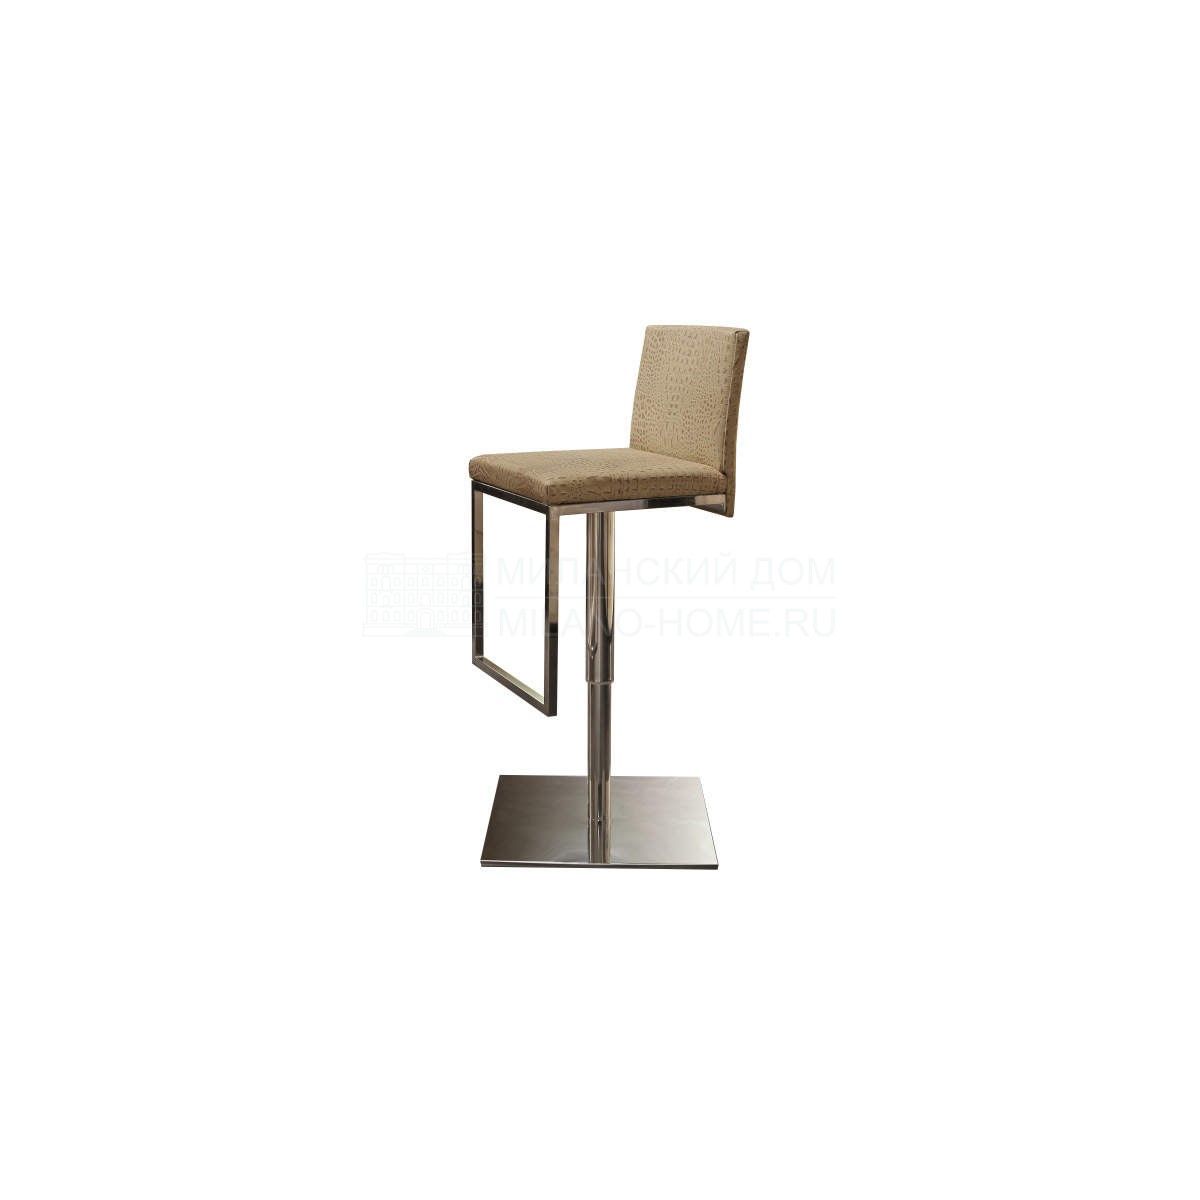 Барный стул Genesis stool из Италии фабрики TURRI